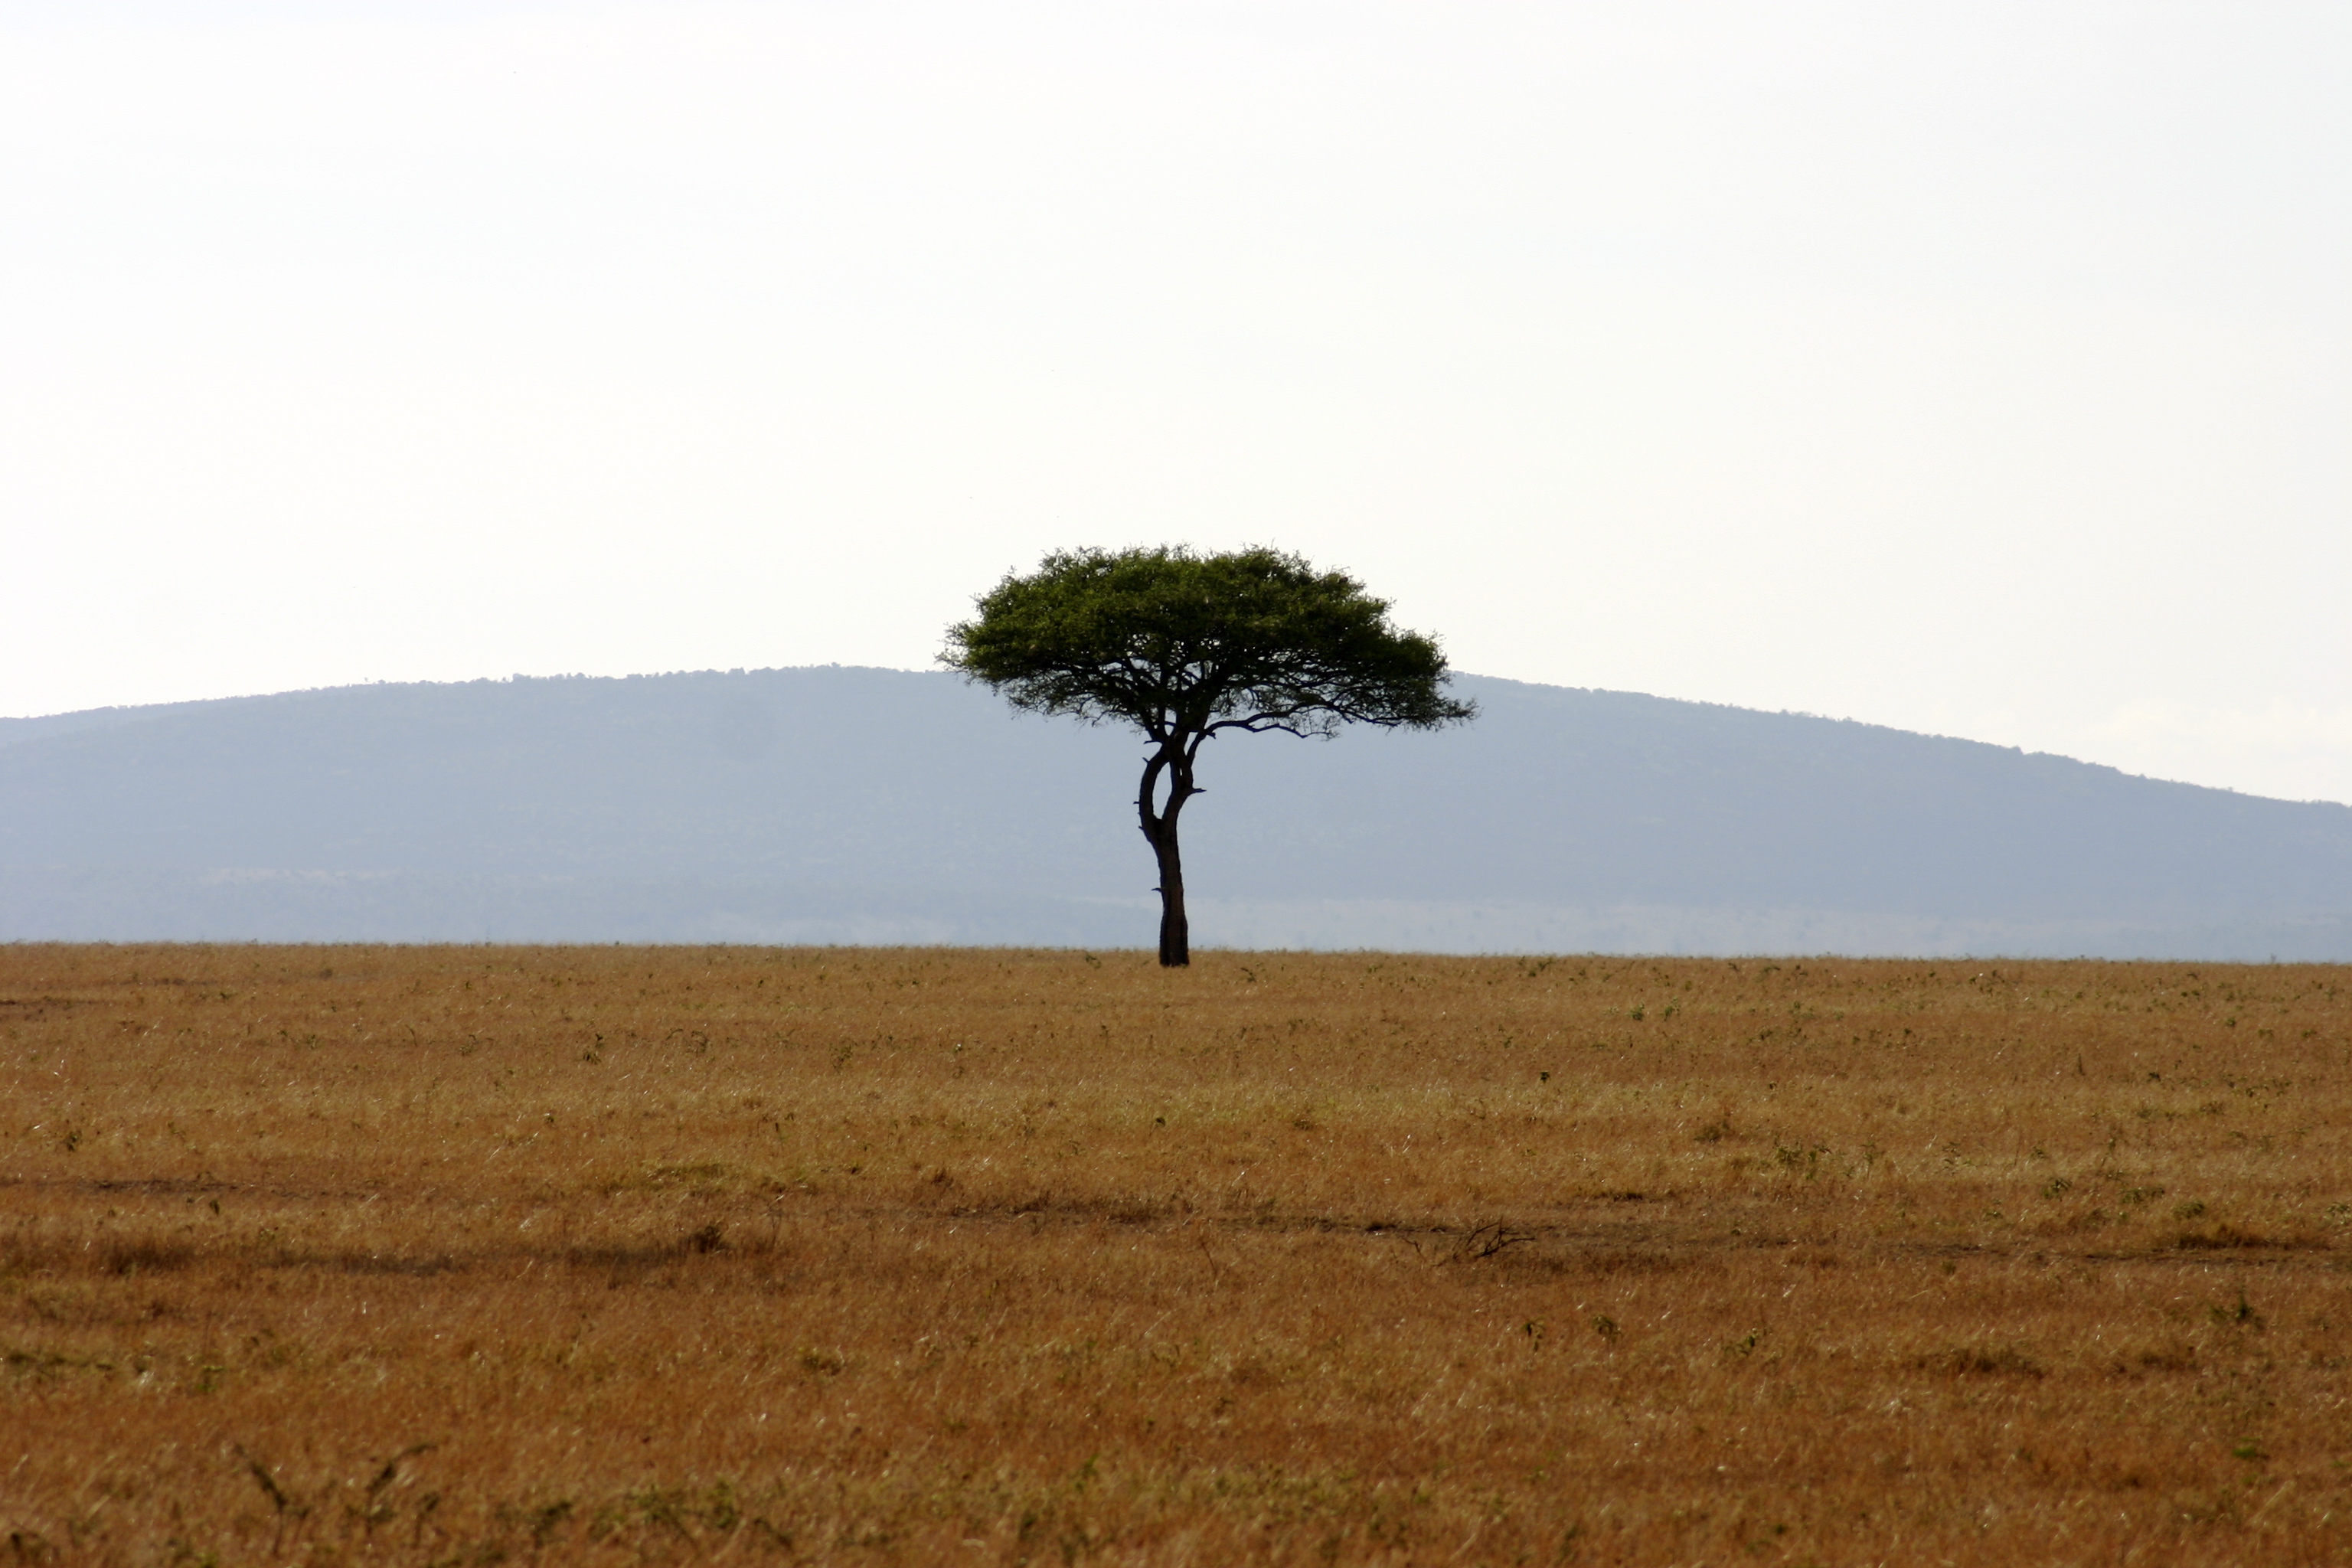 Africa Grasslands 97